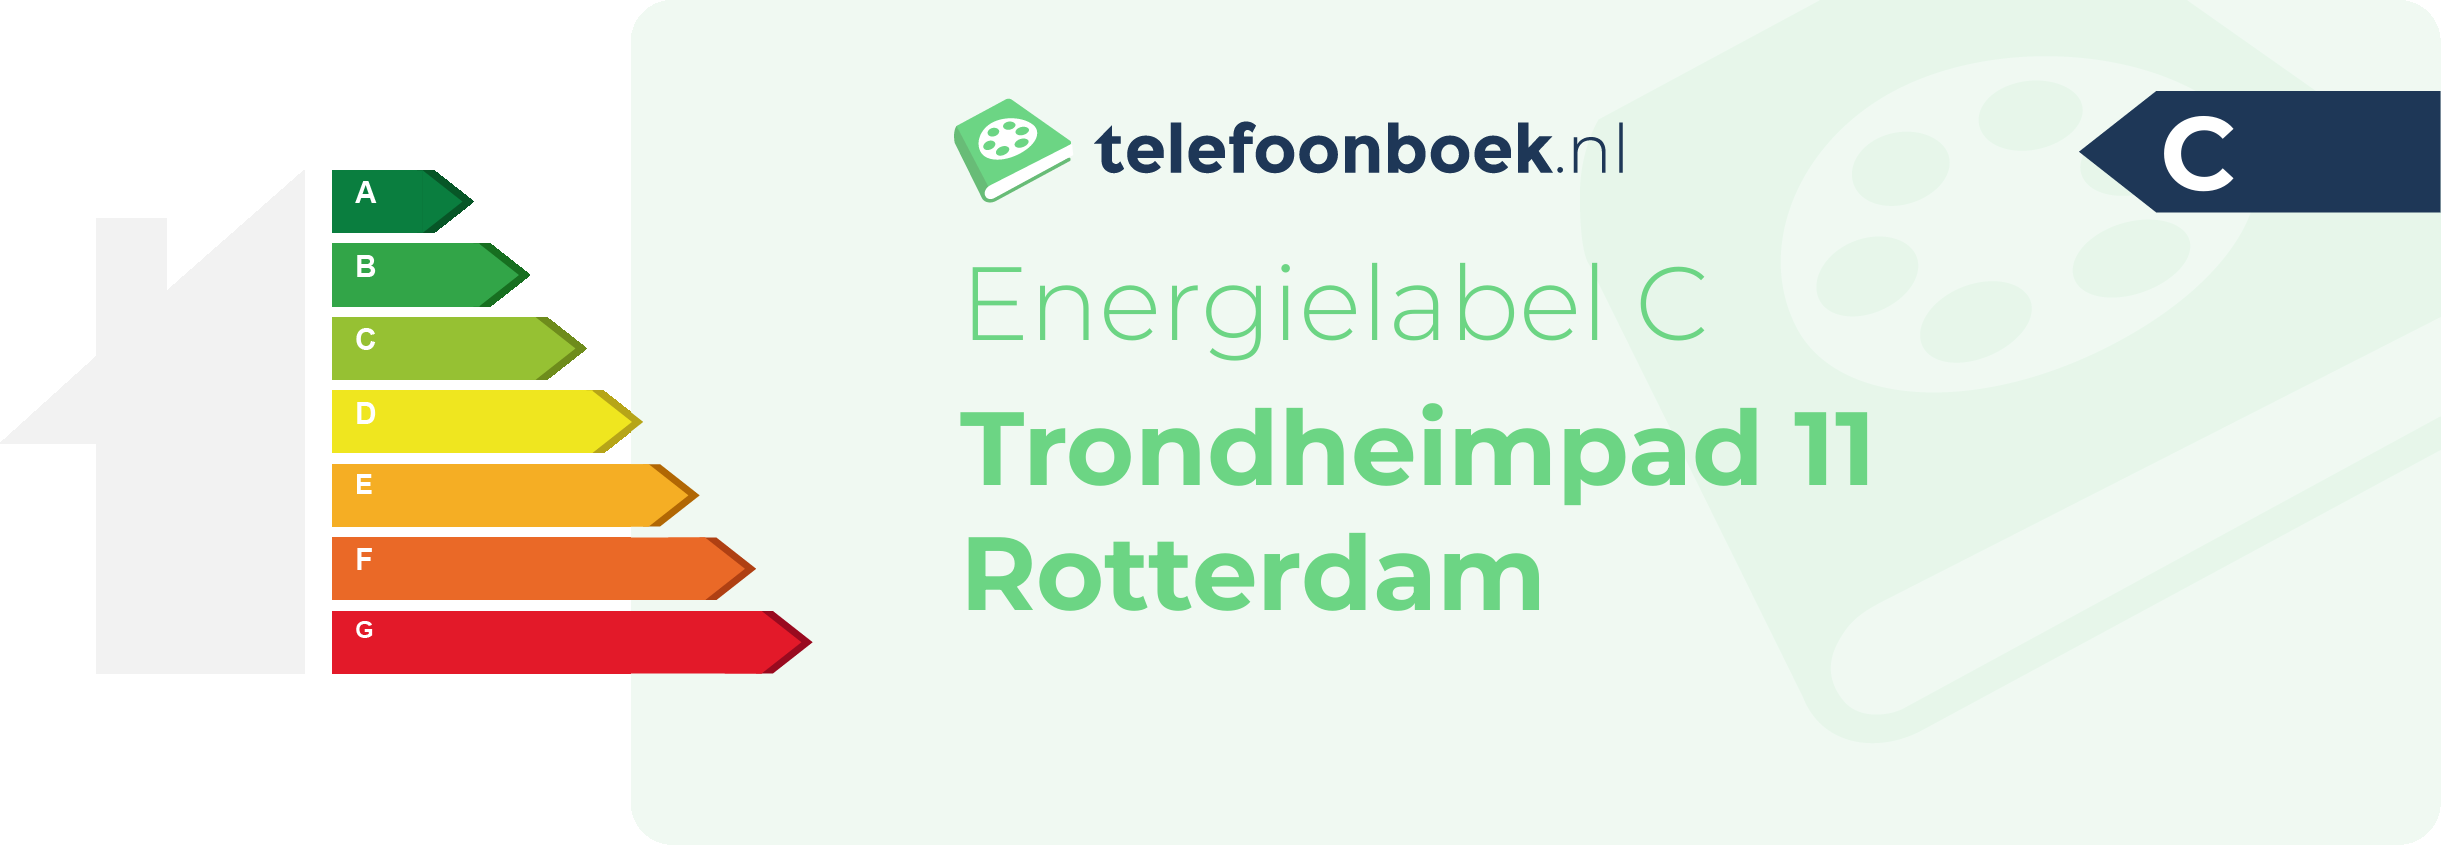 Energielabel Trondheimpad 11 Rotterdam